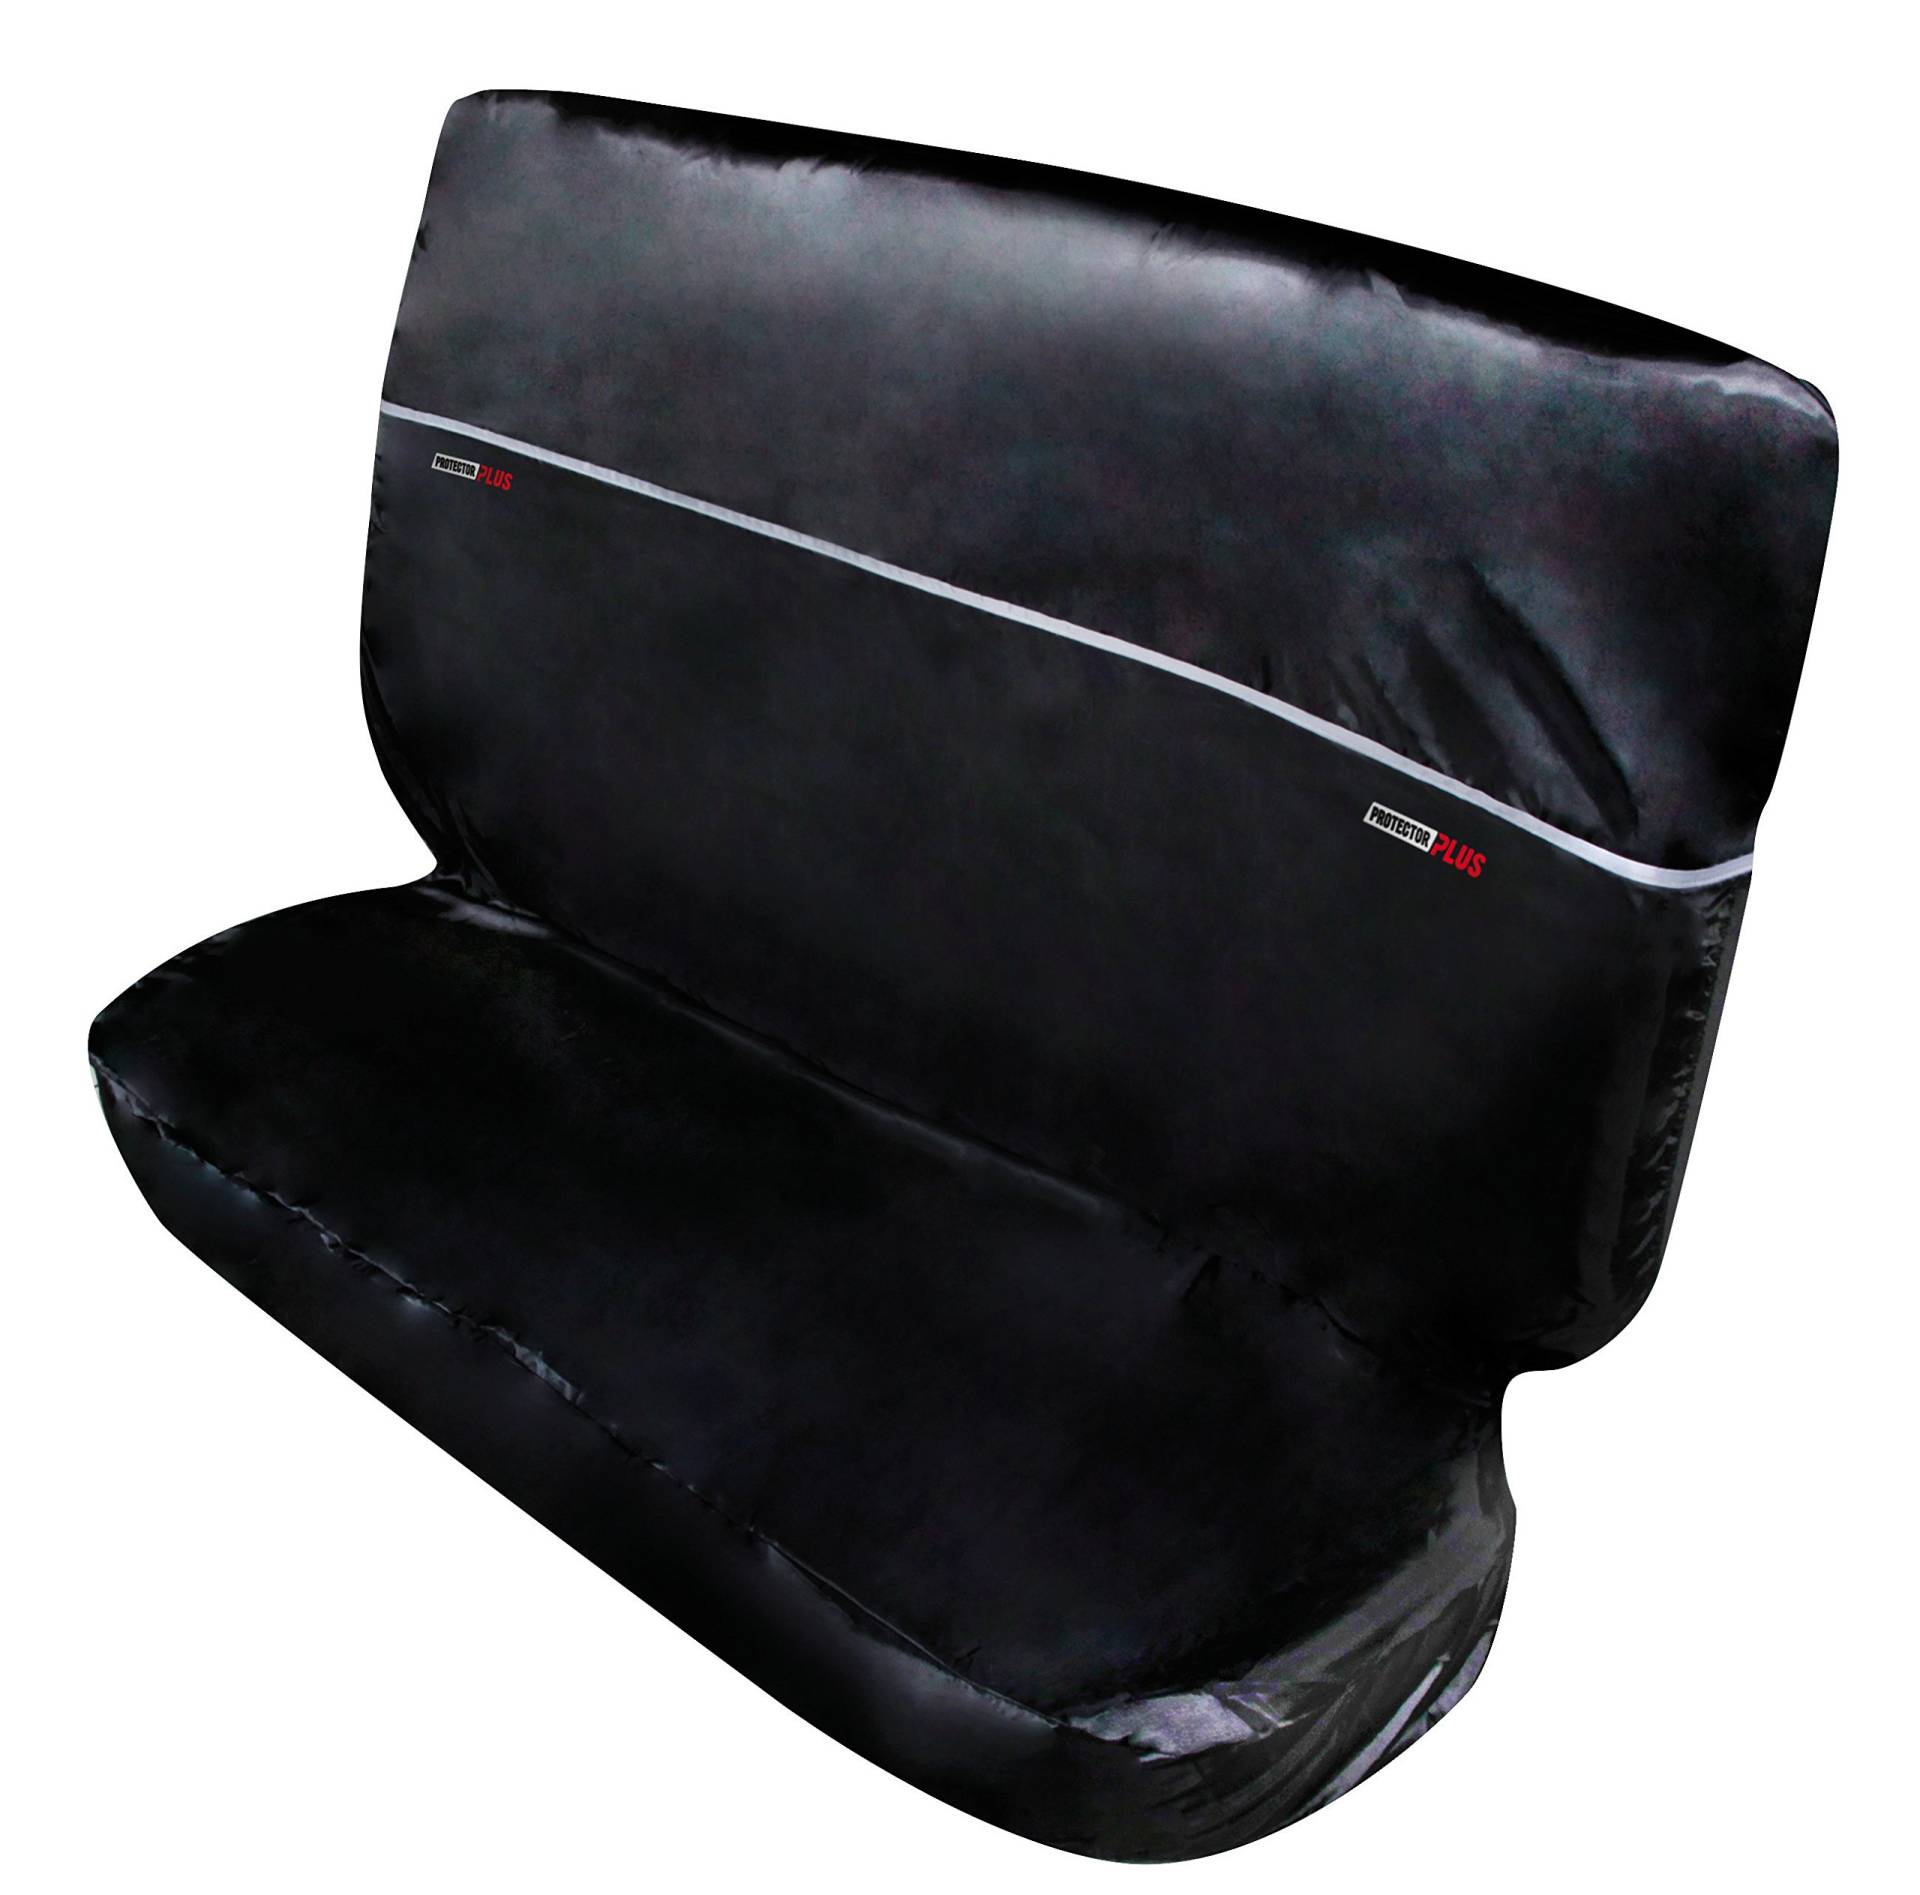 Lampa 53243 Protector-Plus Auto Sitzbezug für Rückbank von Lampa